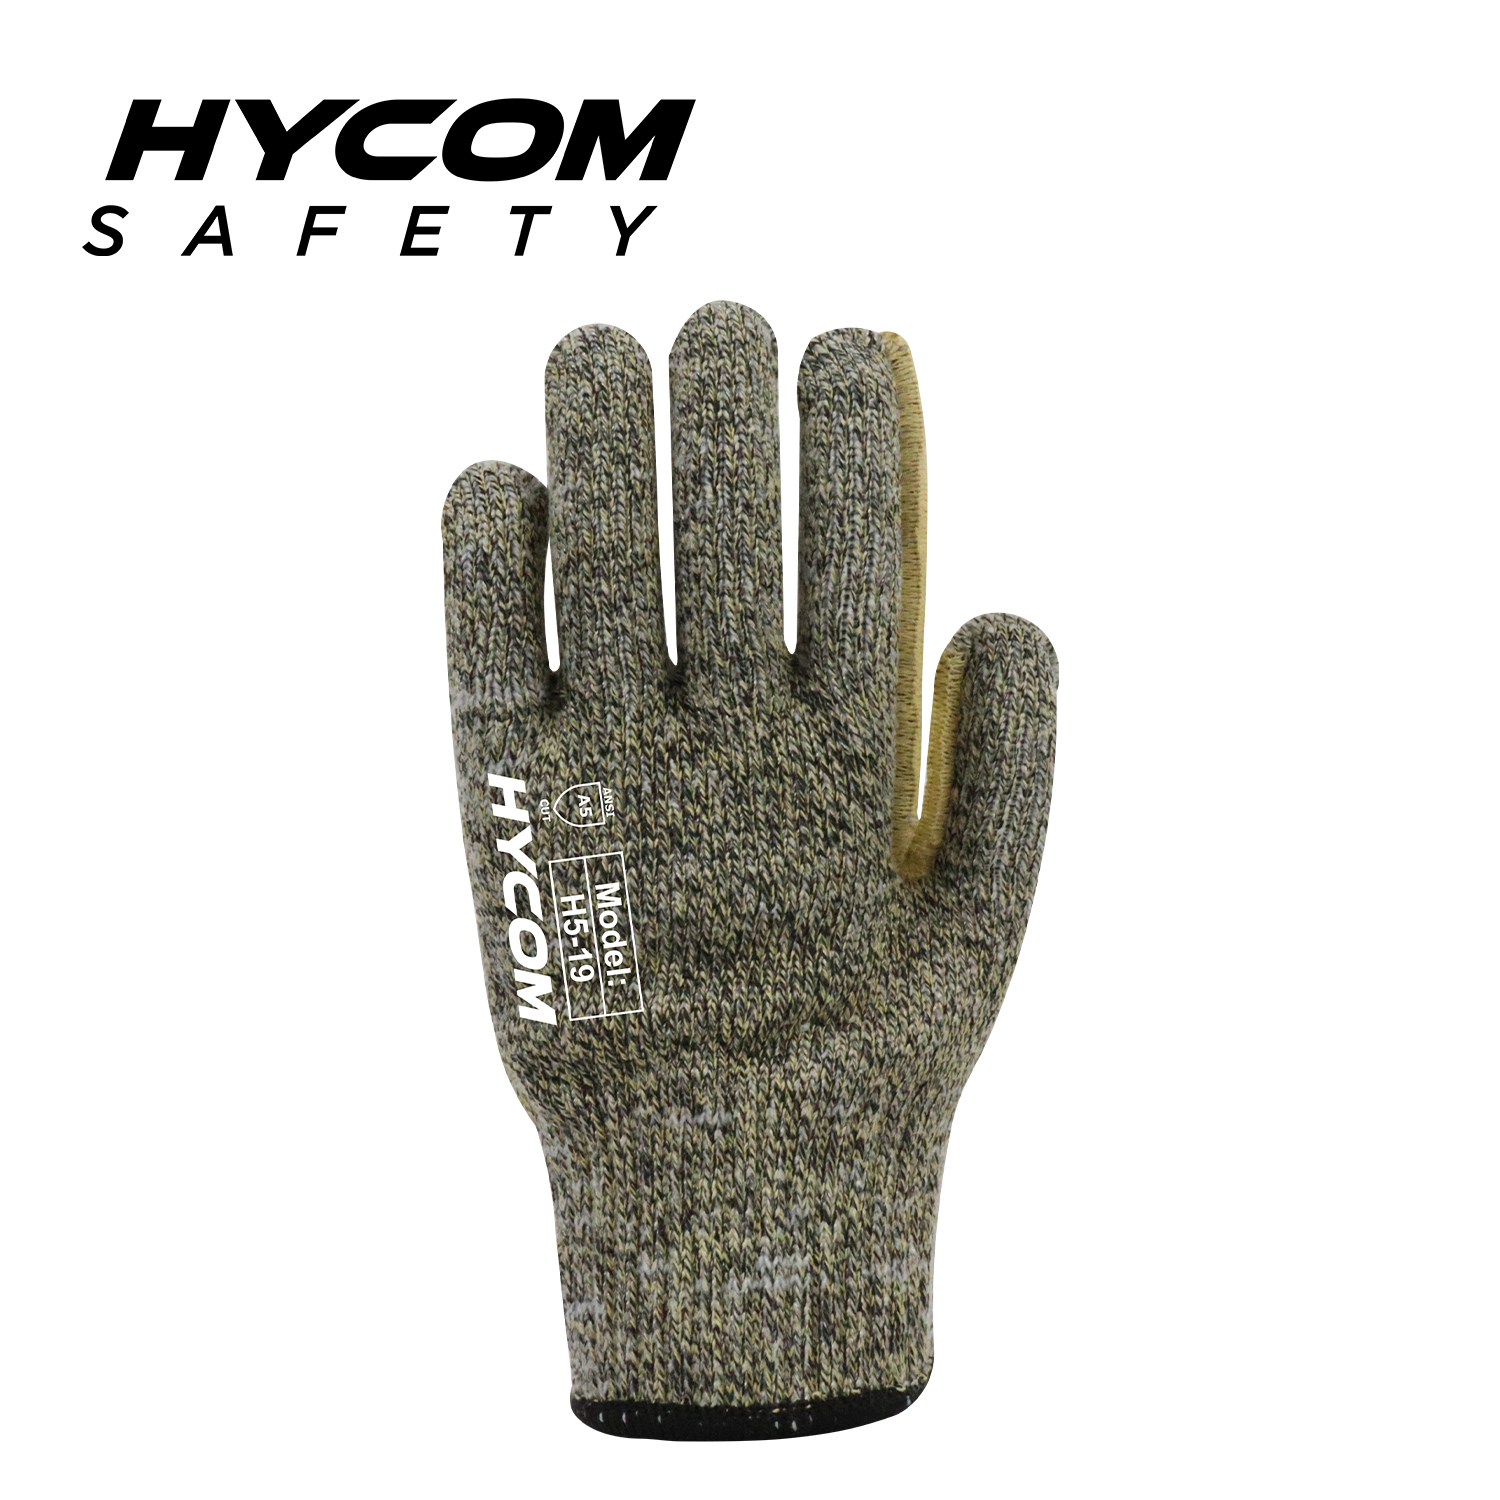 HYCOM 7G ANSI Cut 5 Hitzebeständiger Handschuh Aramid-Handschuh mit hohem Schnitt